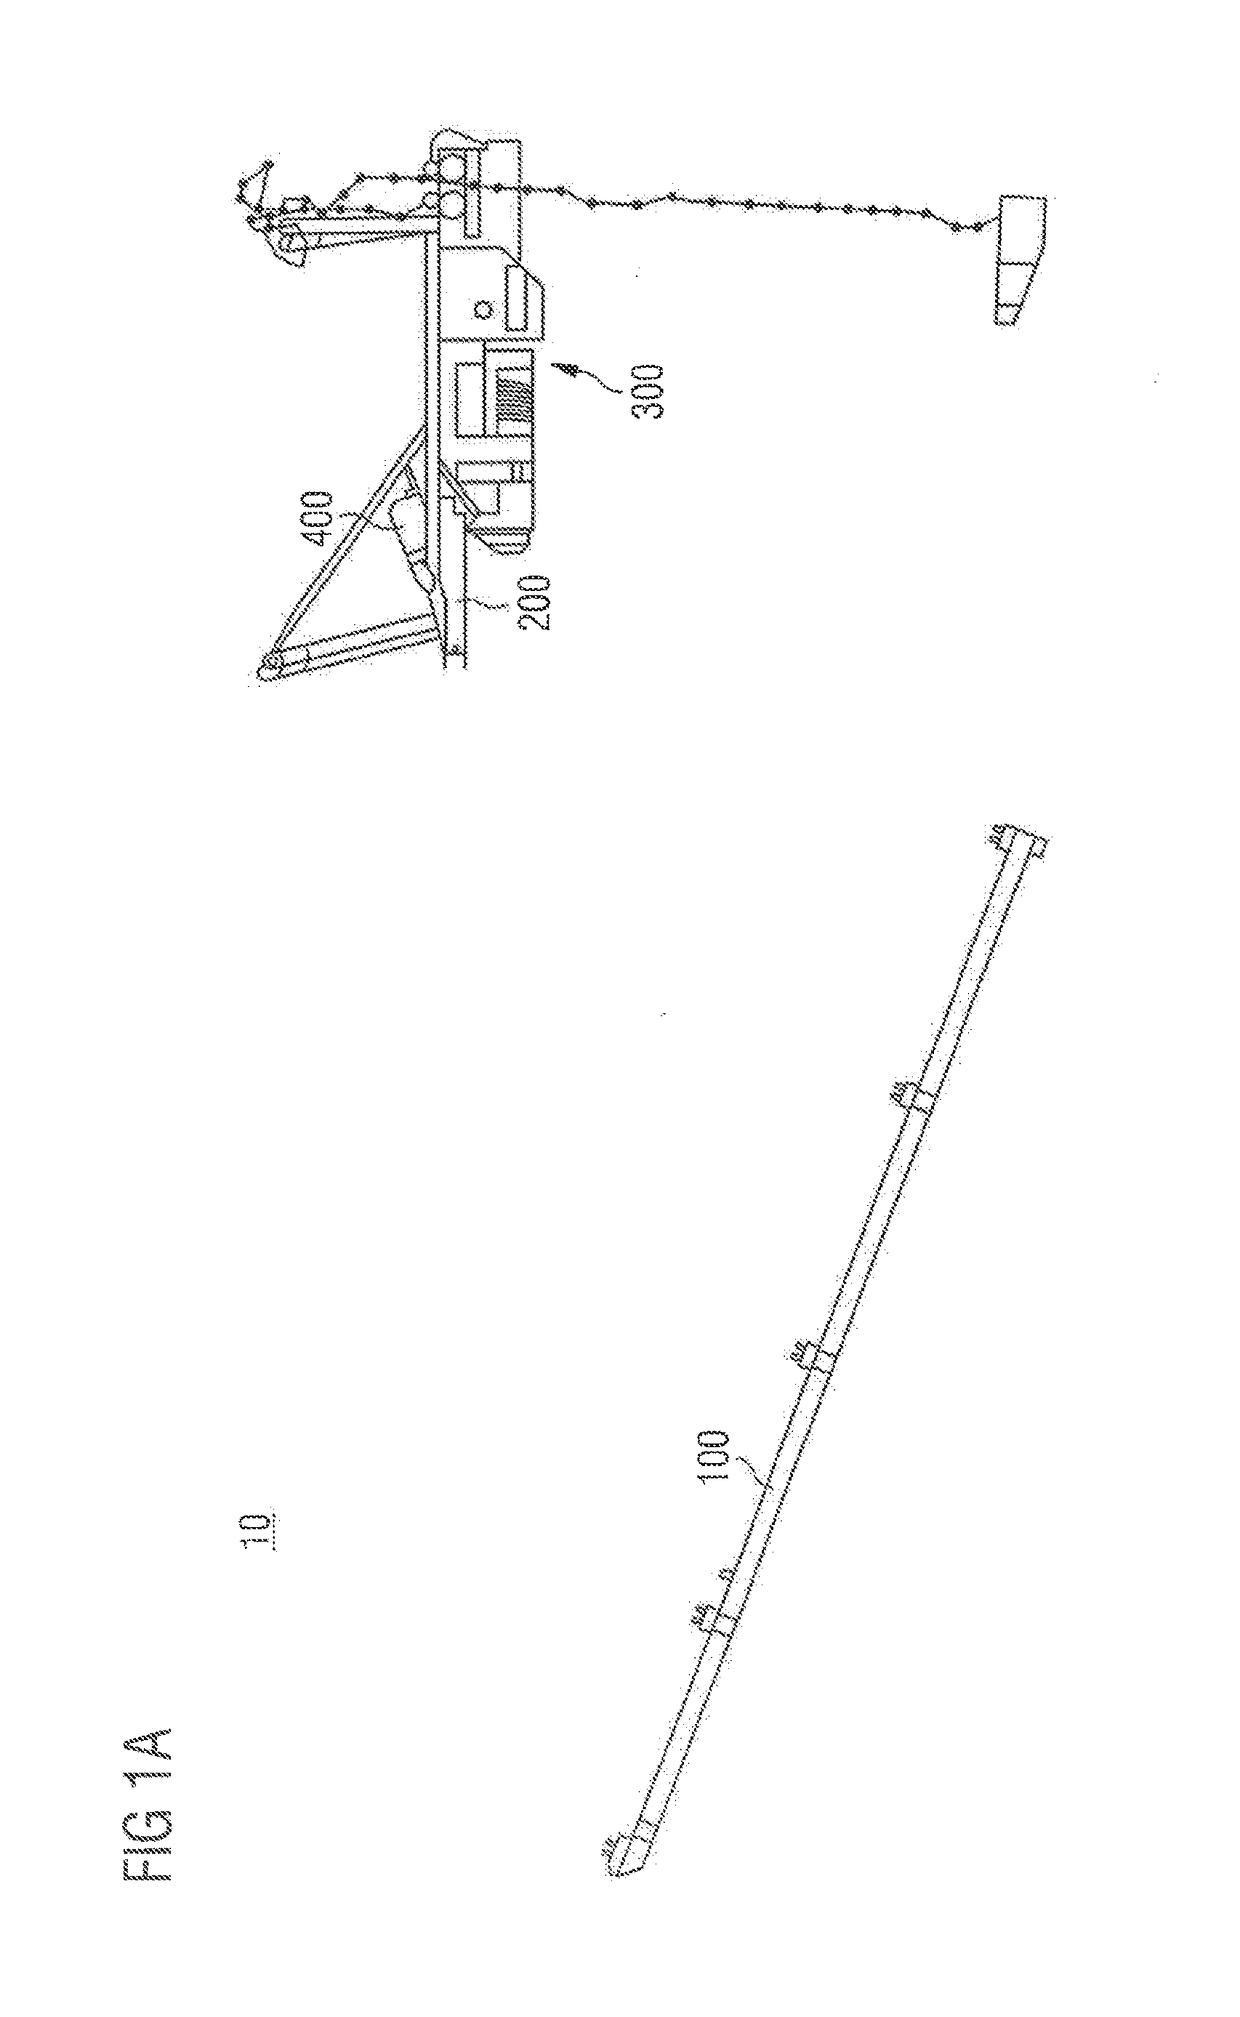 Mono-rail crane system in an aircraft